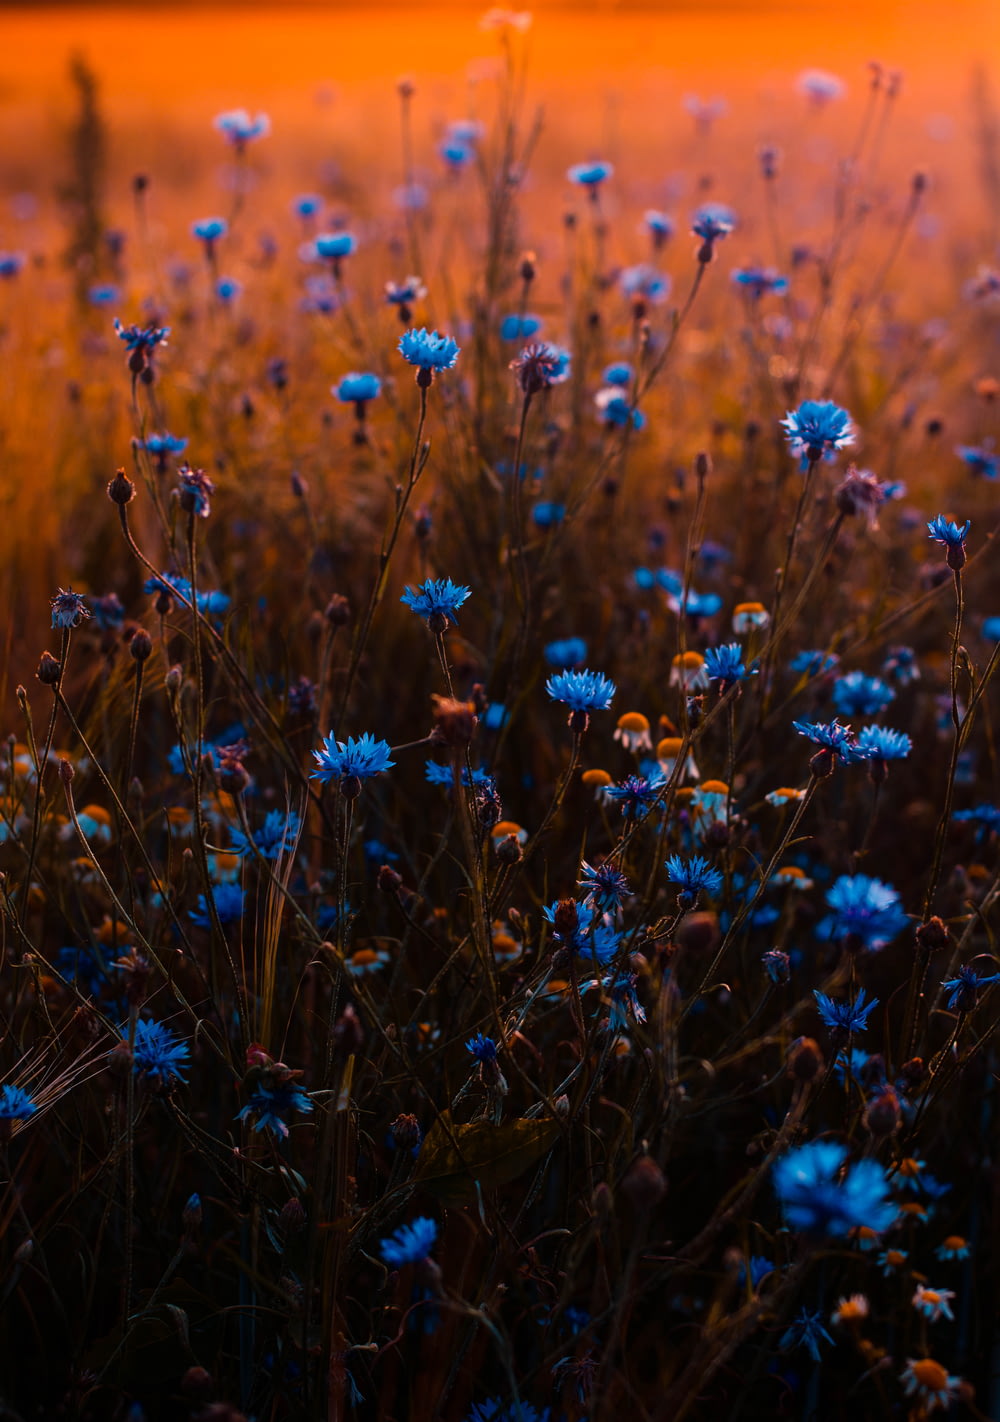 closeup photo of blue petaled flowers